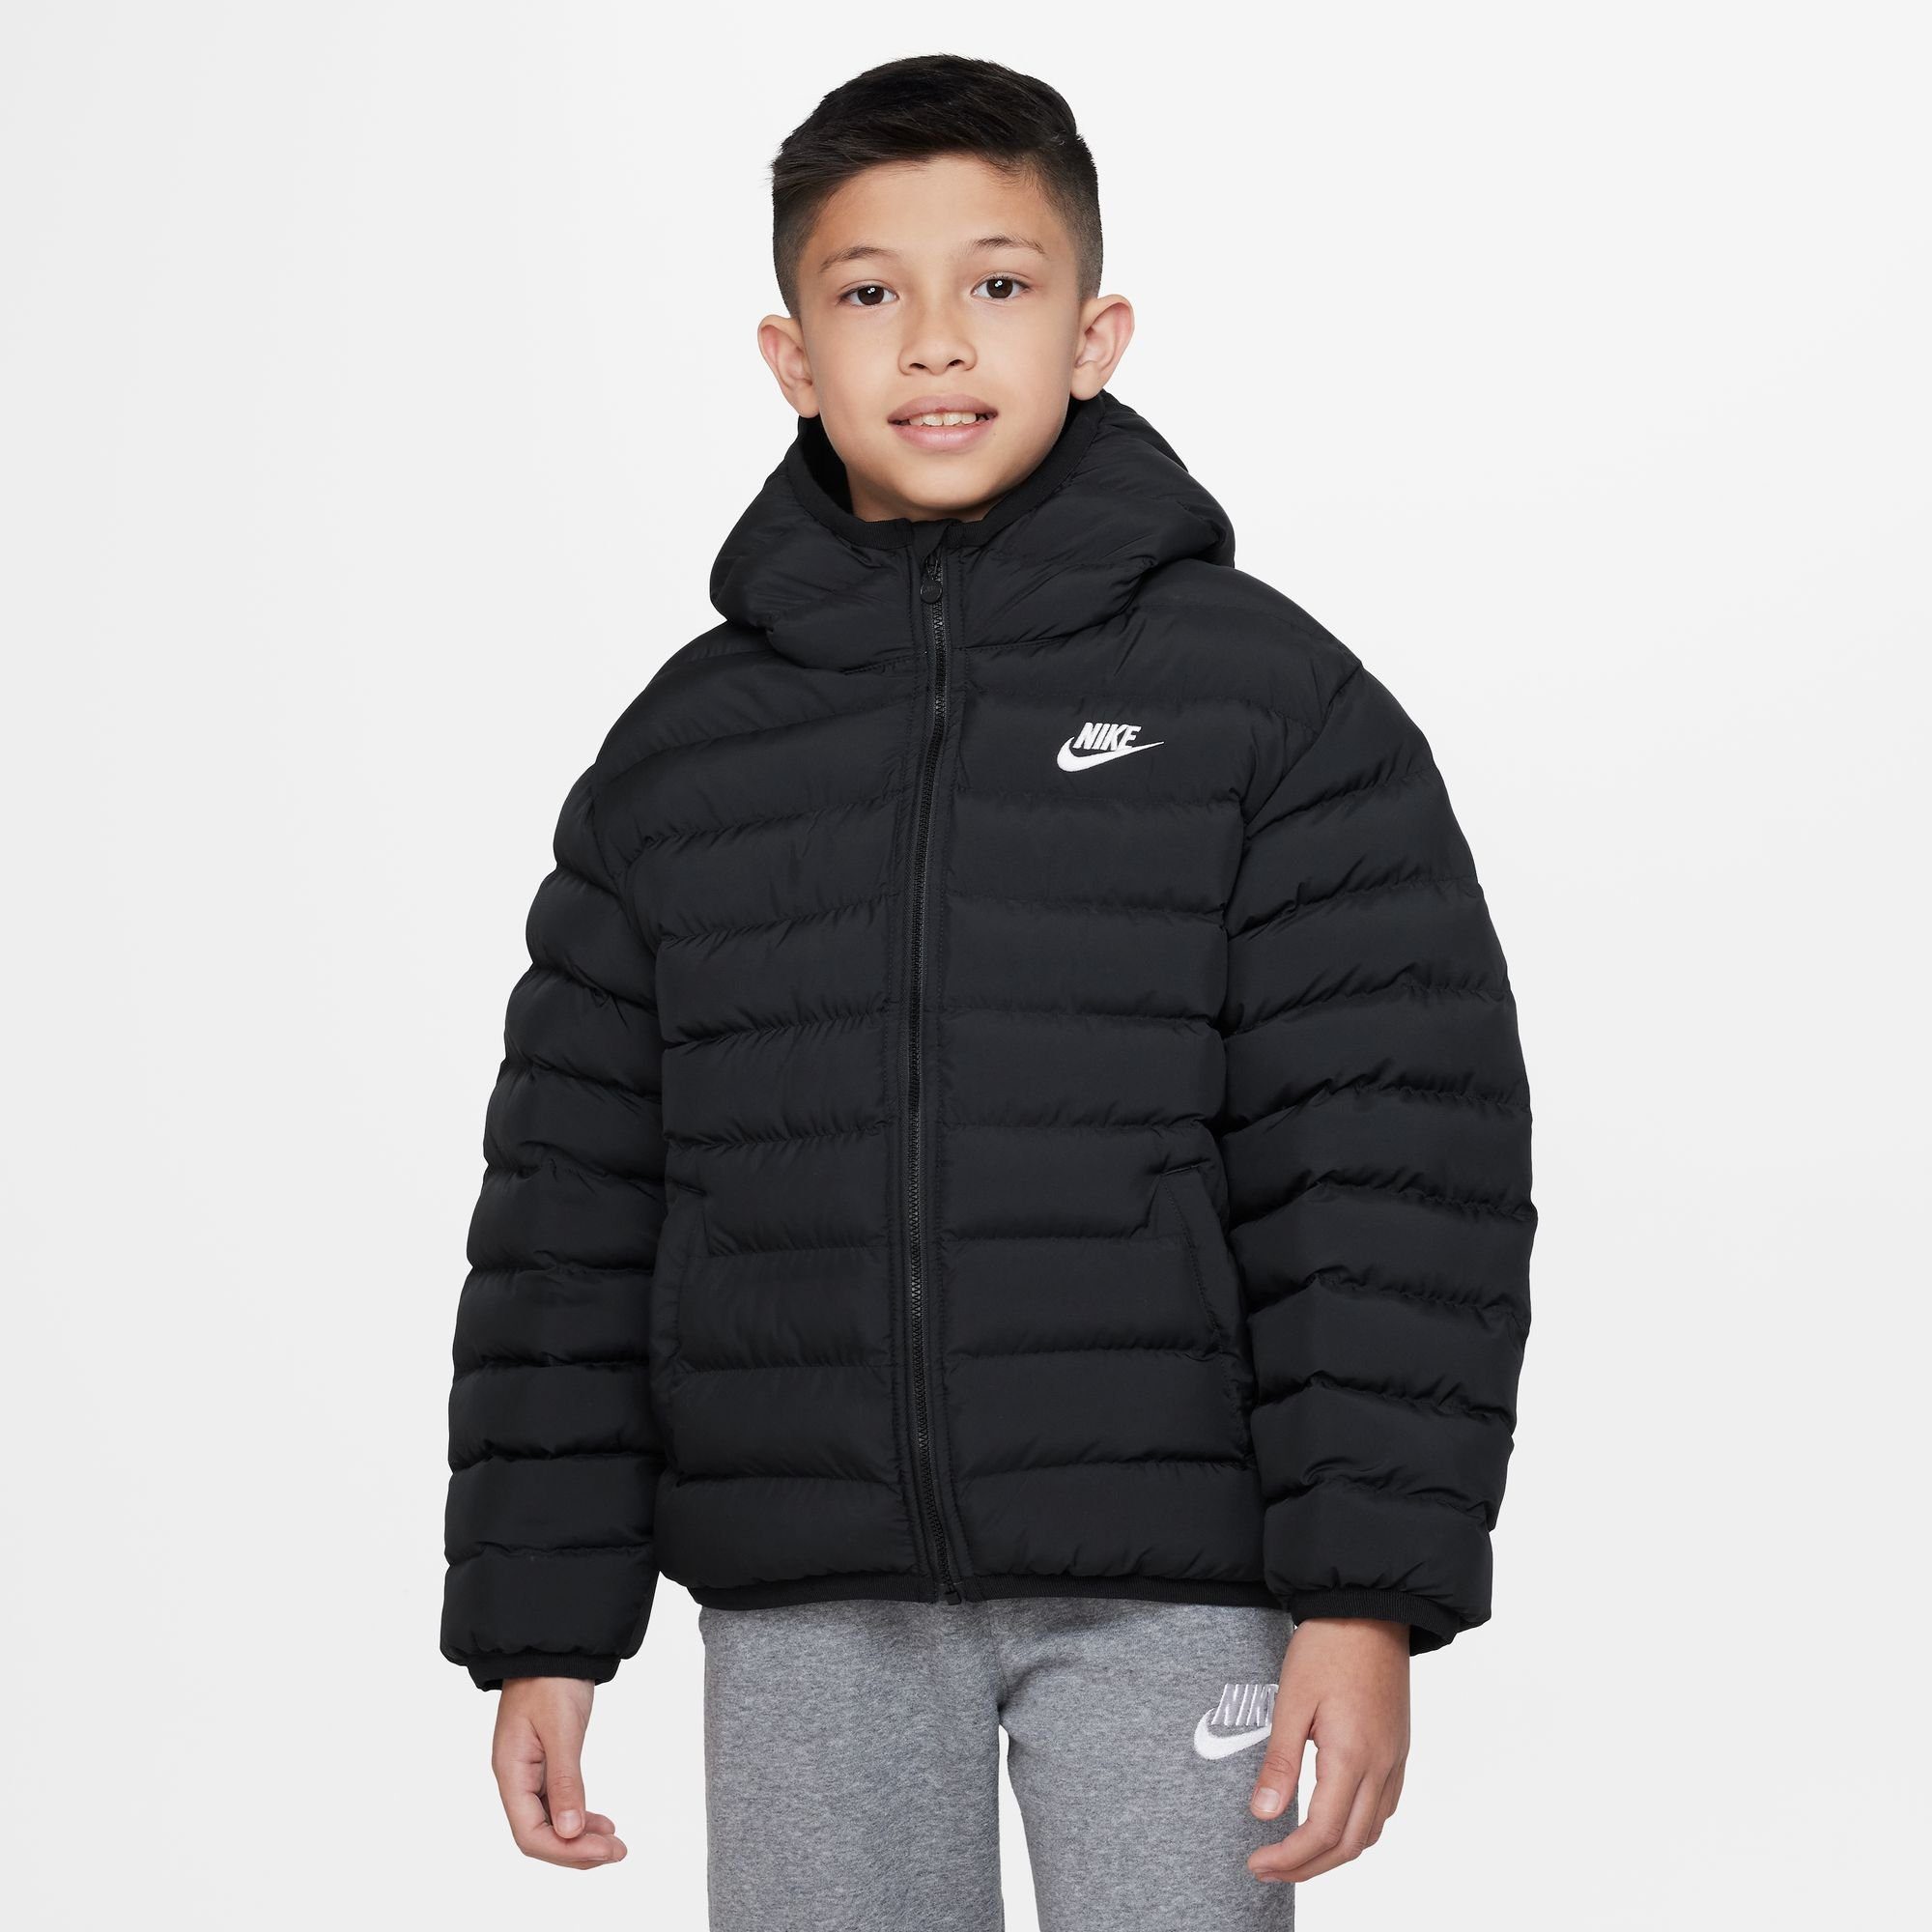 SYNFL Nike BLACK/BLACK/WHITE - HD Sportswear NSW Kinder JKT K LOW Outdoorjacke für